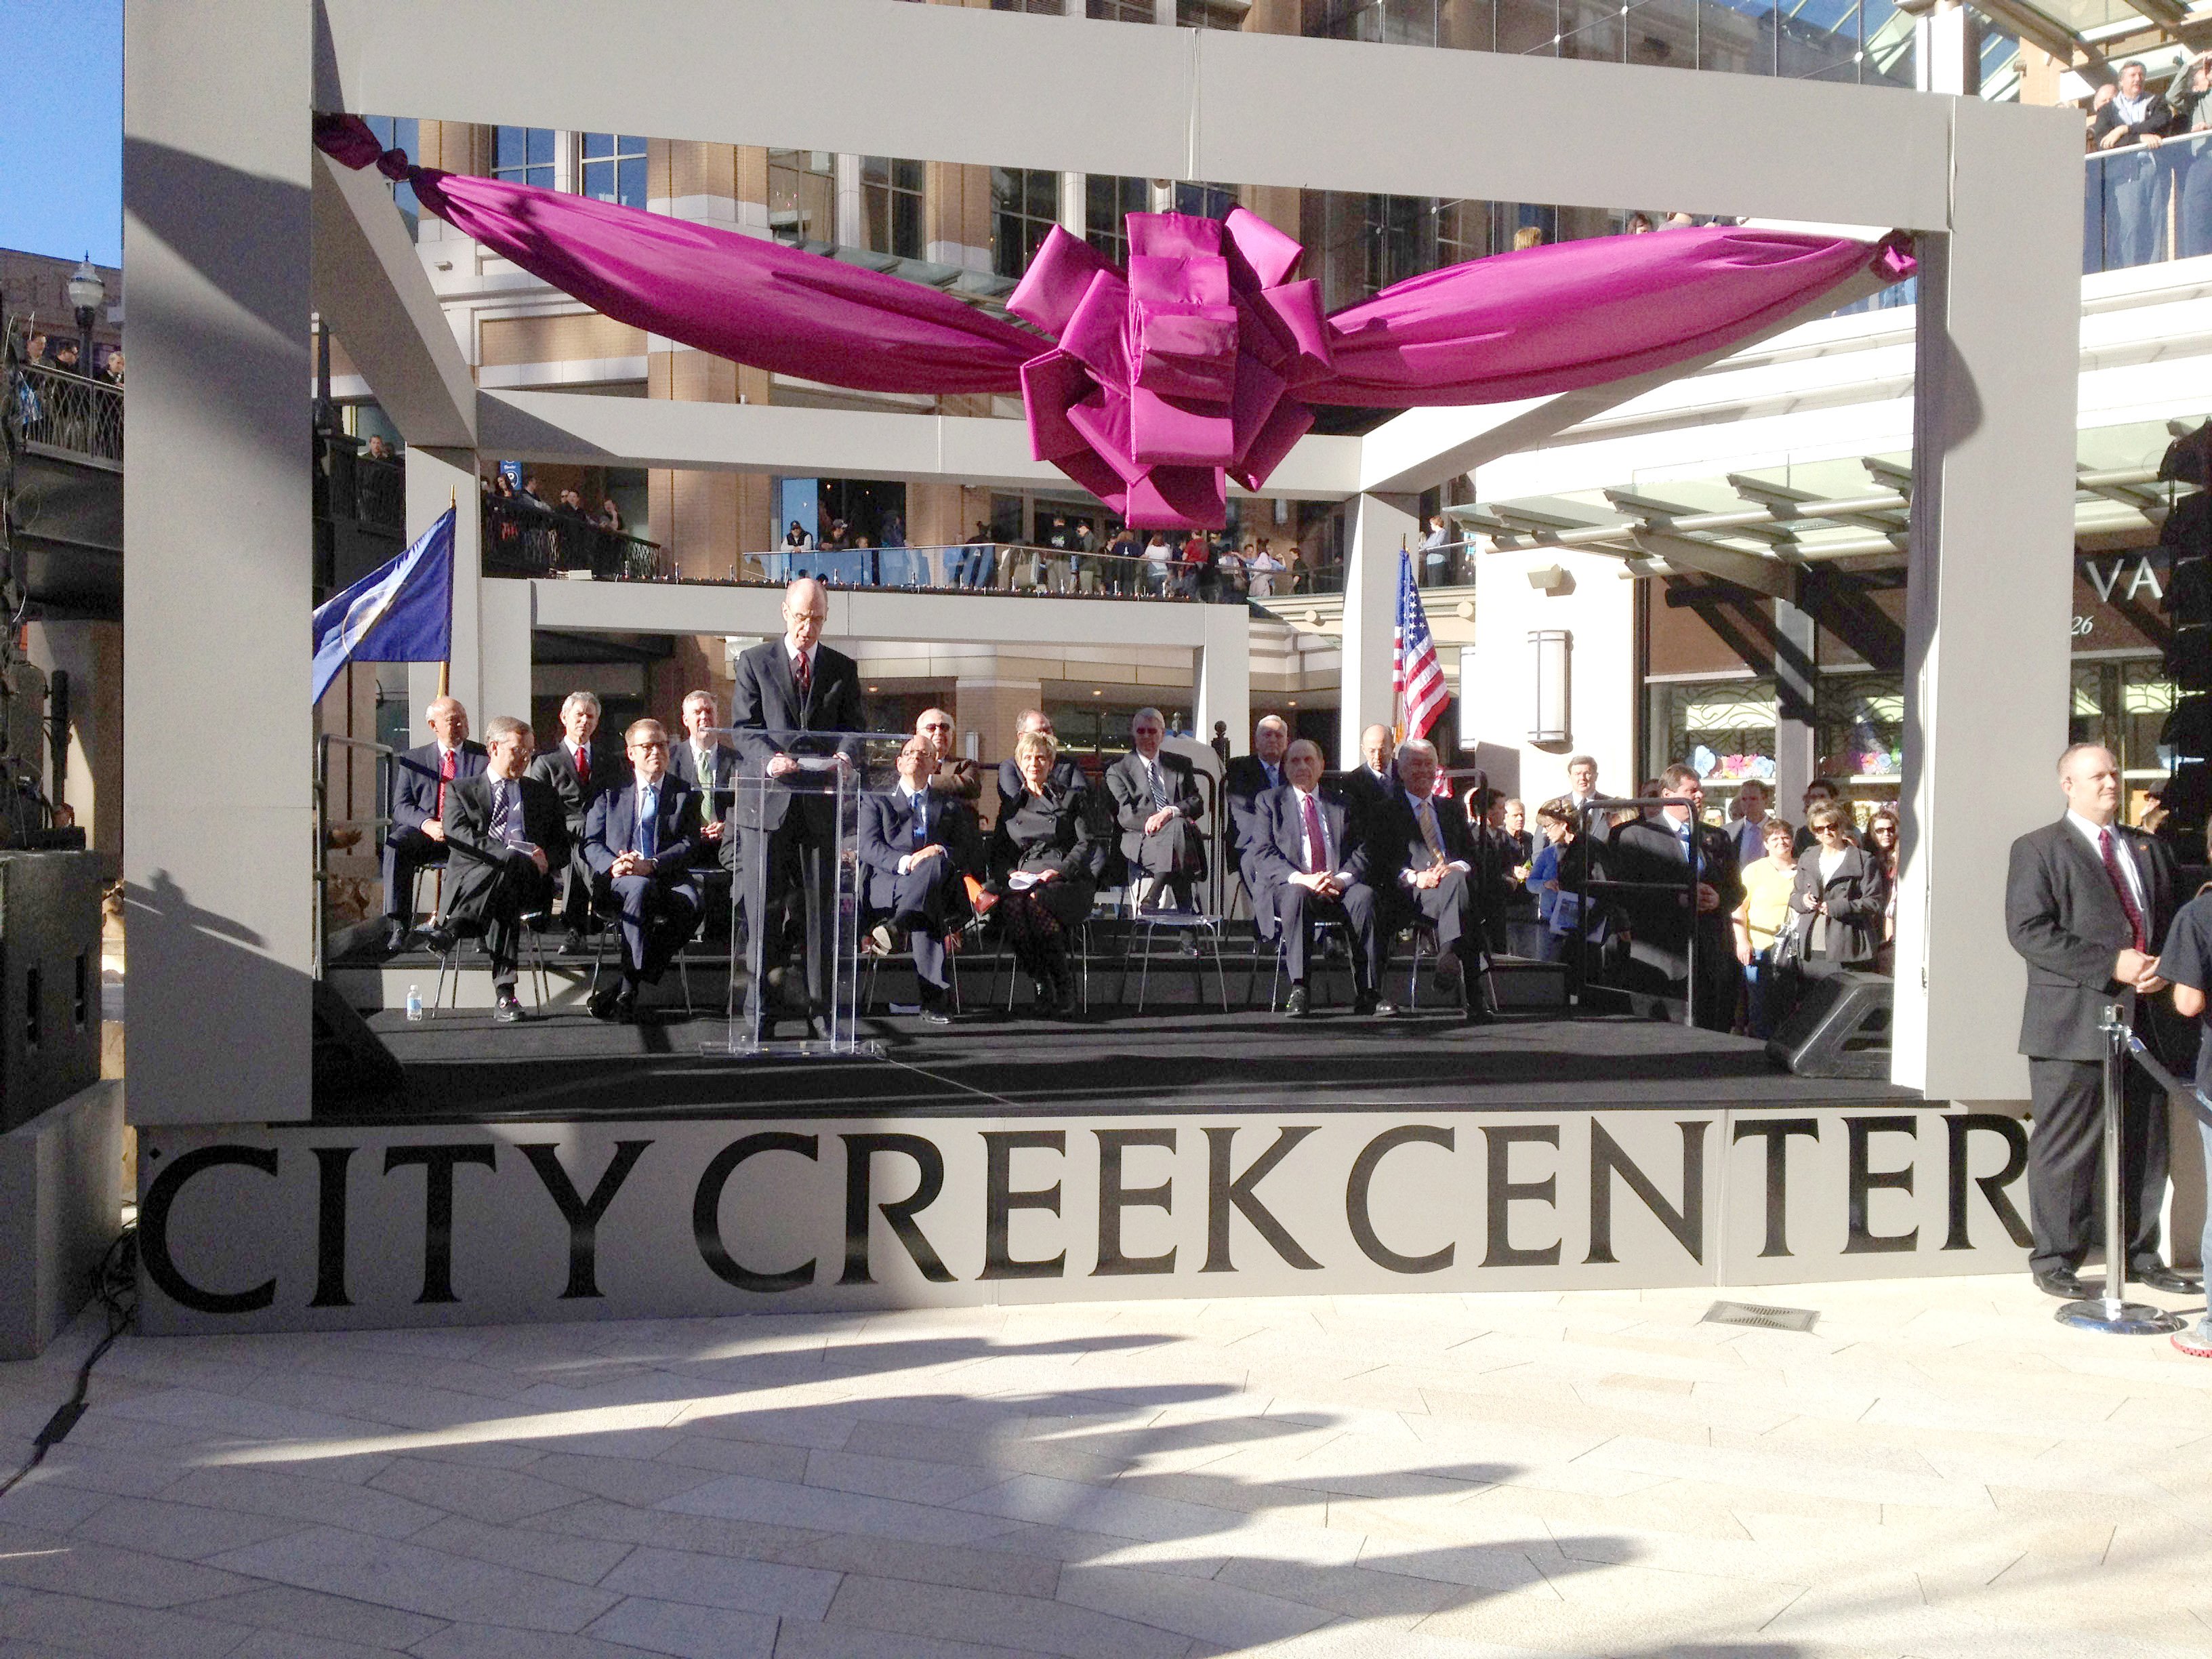 City Creek Center - The Salt Lake Tribune